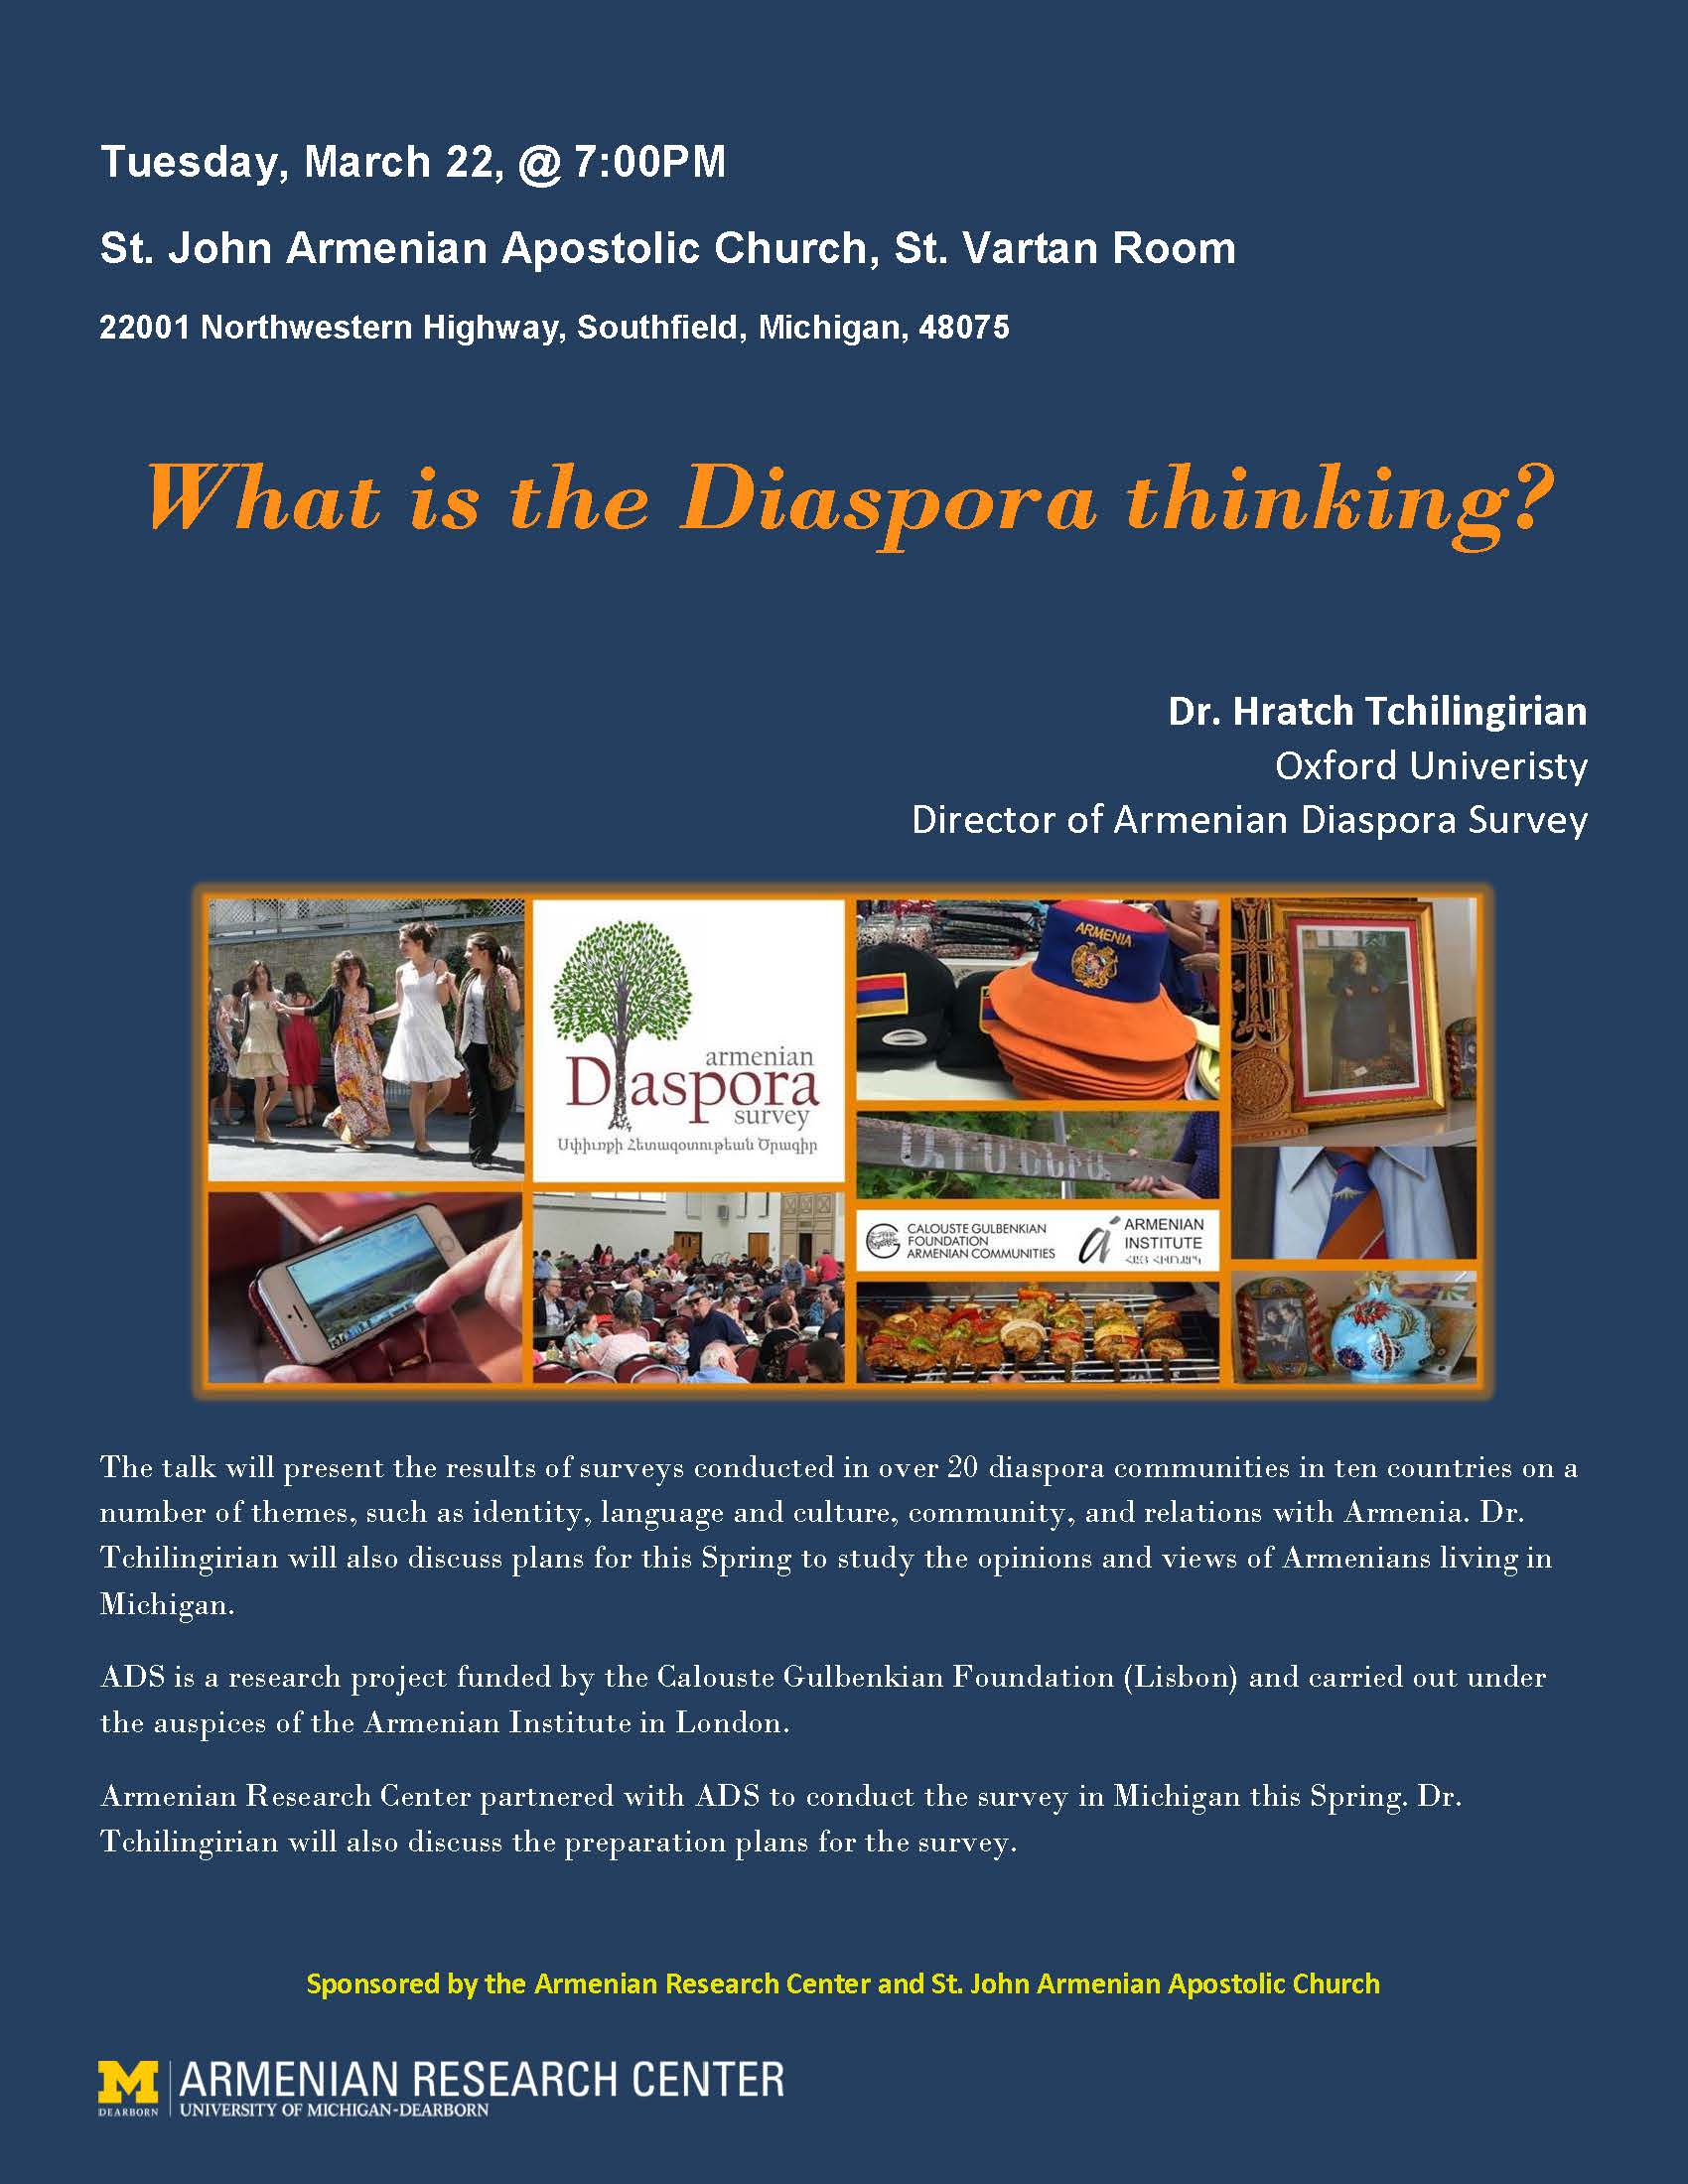 What is the diaspora thinking?